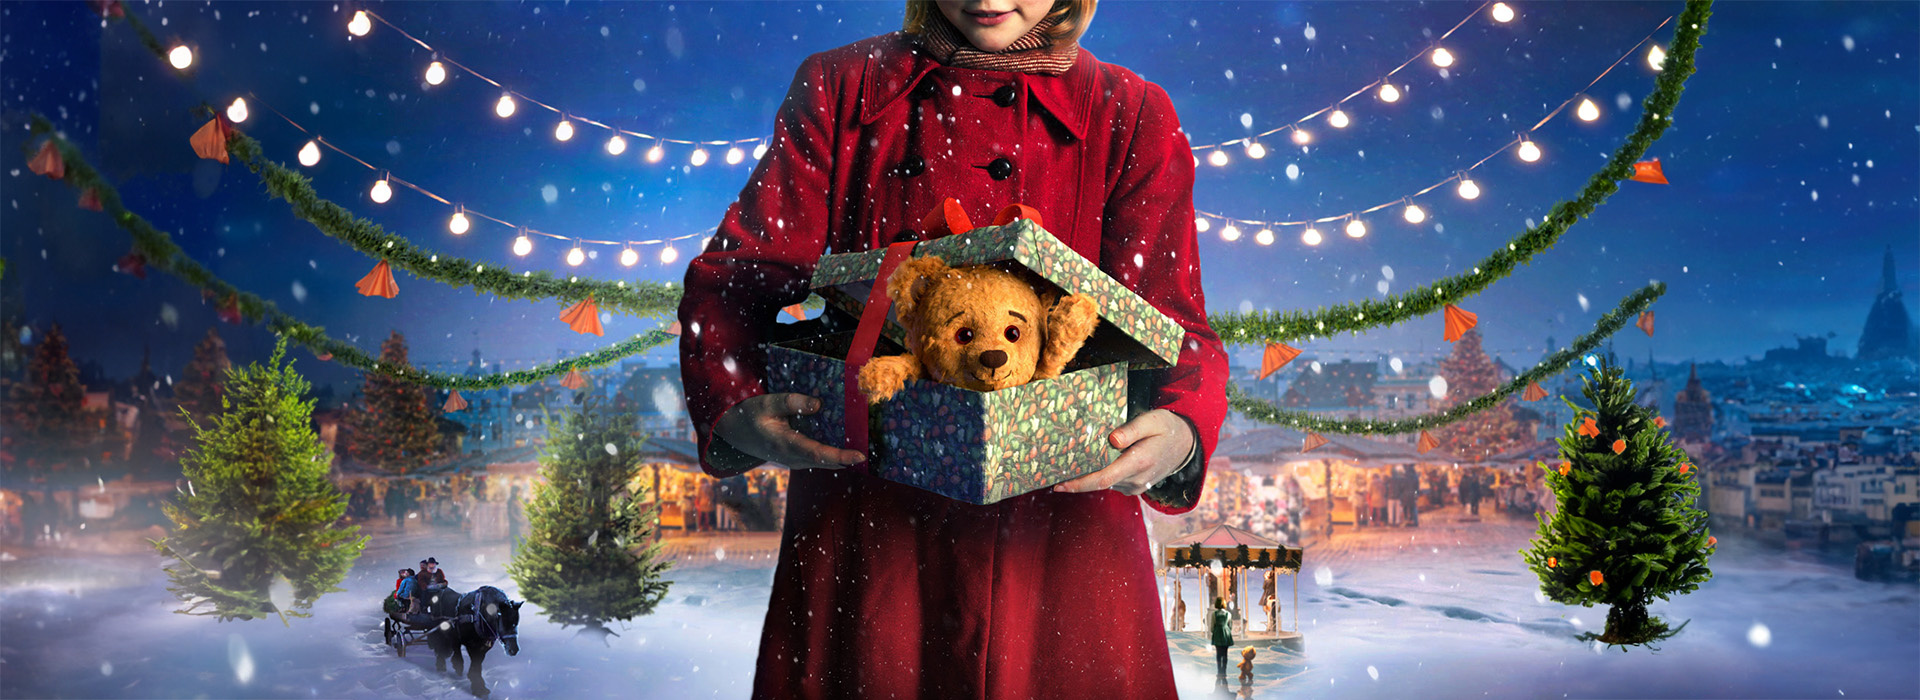 Movie poster Teddy's Christmas